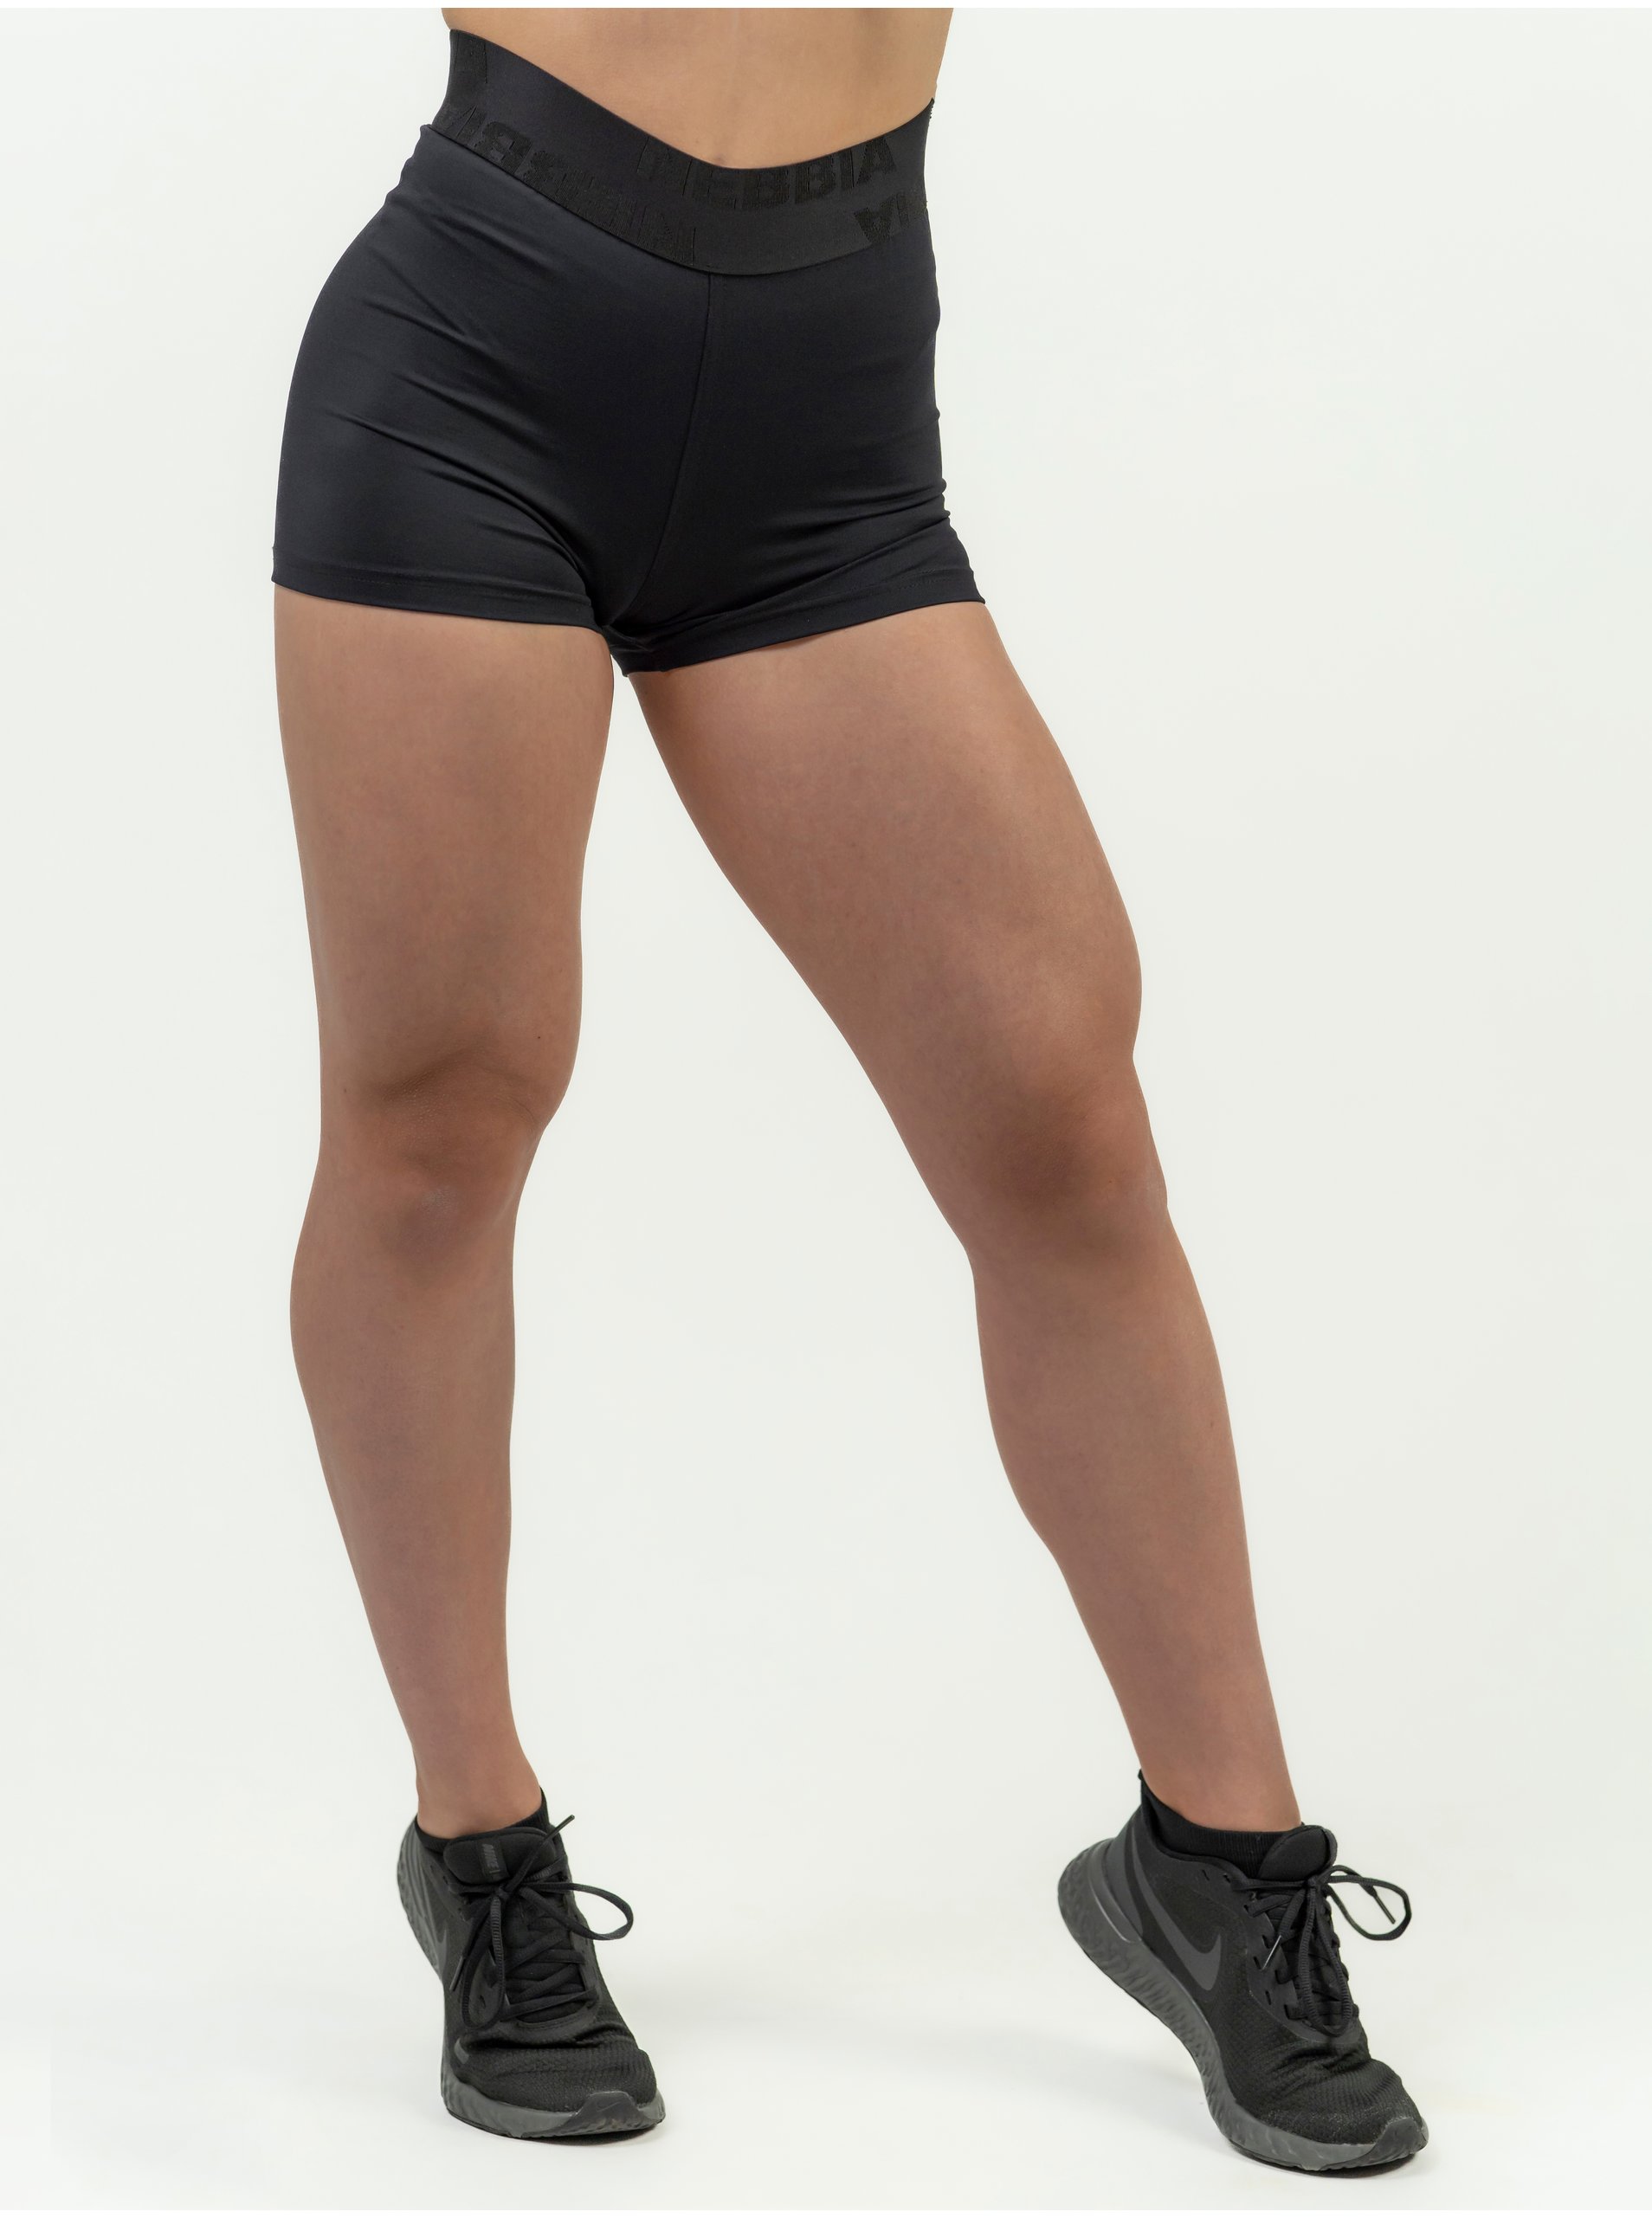 E-shop Čierne dámske športové kompresné kraťasy NEBBIA Intense Leg Day